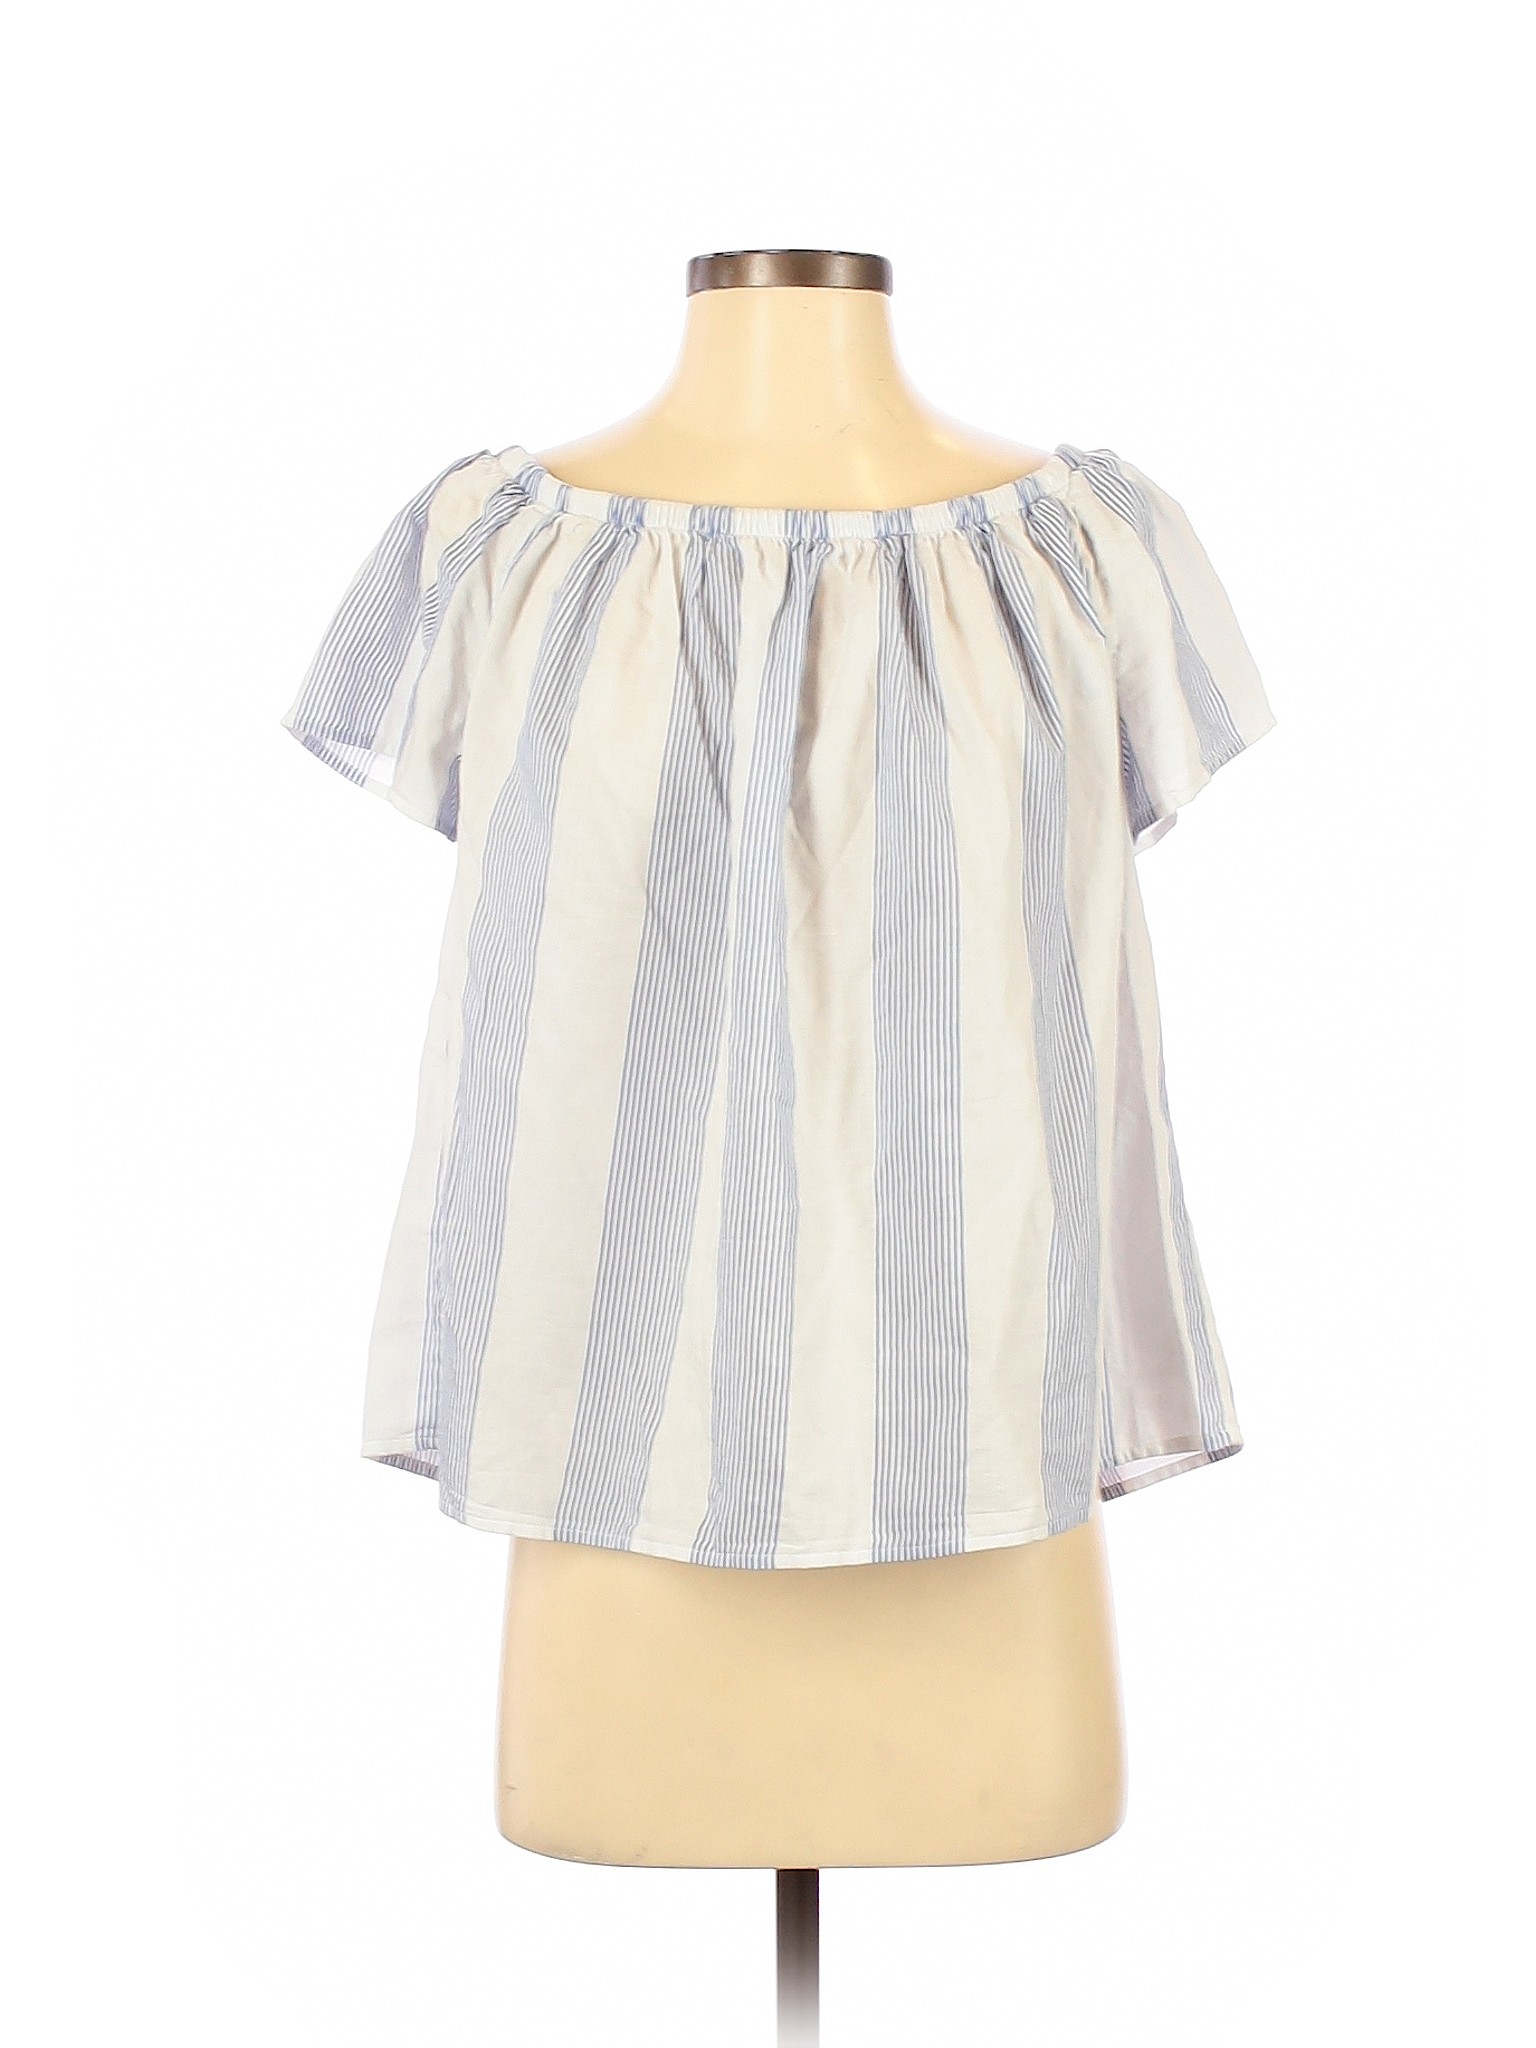 Gap Women White Short Sleeve Blouse XS | eBay